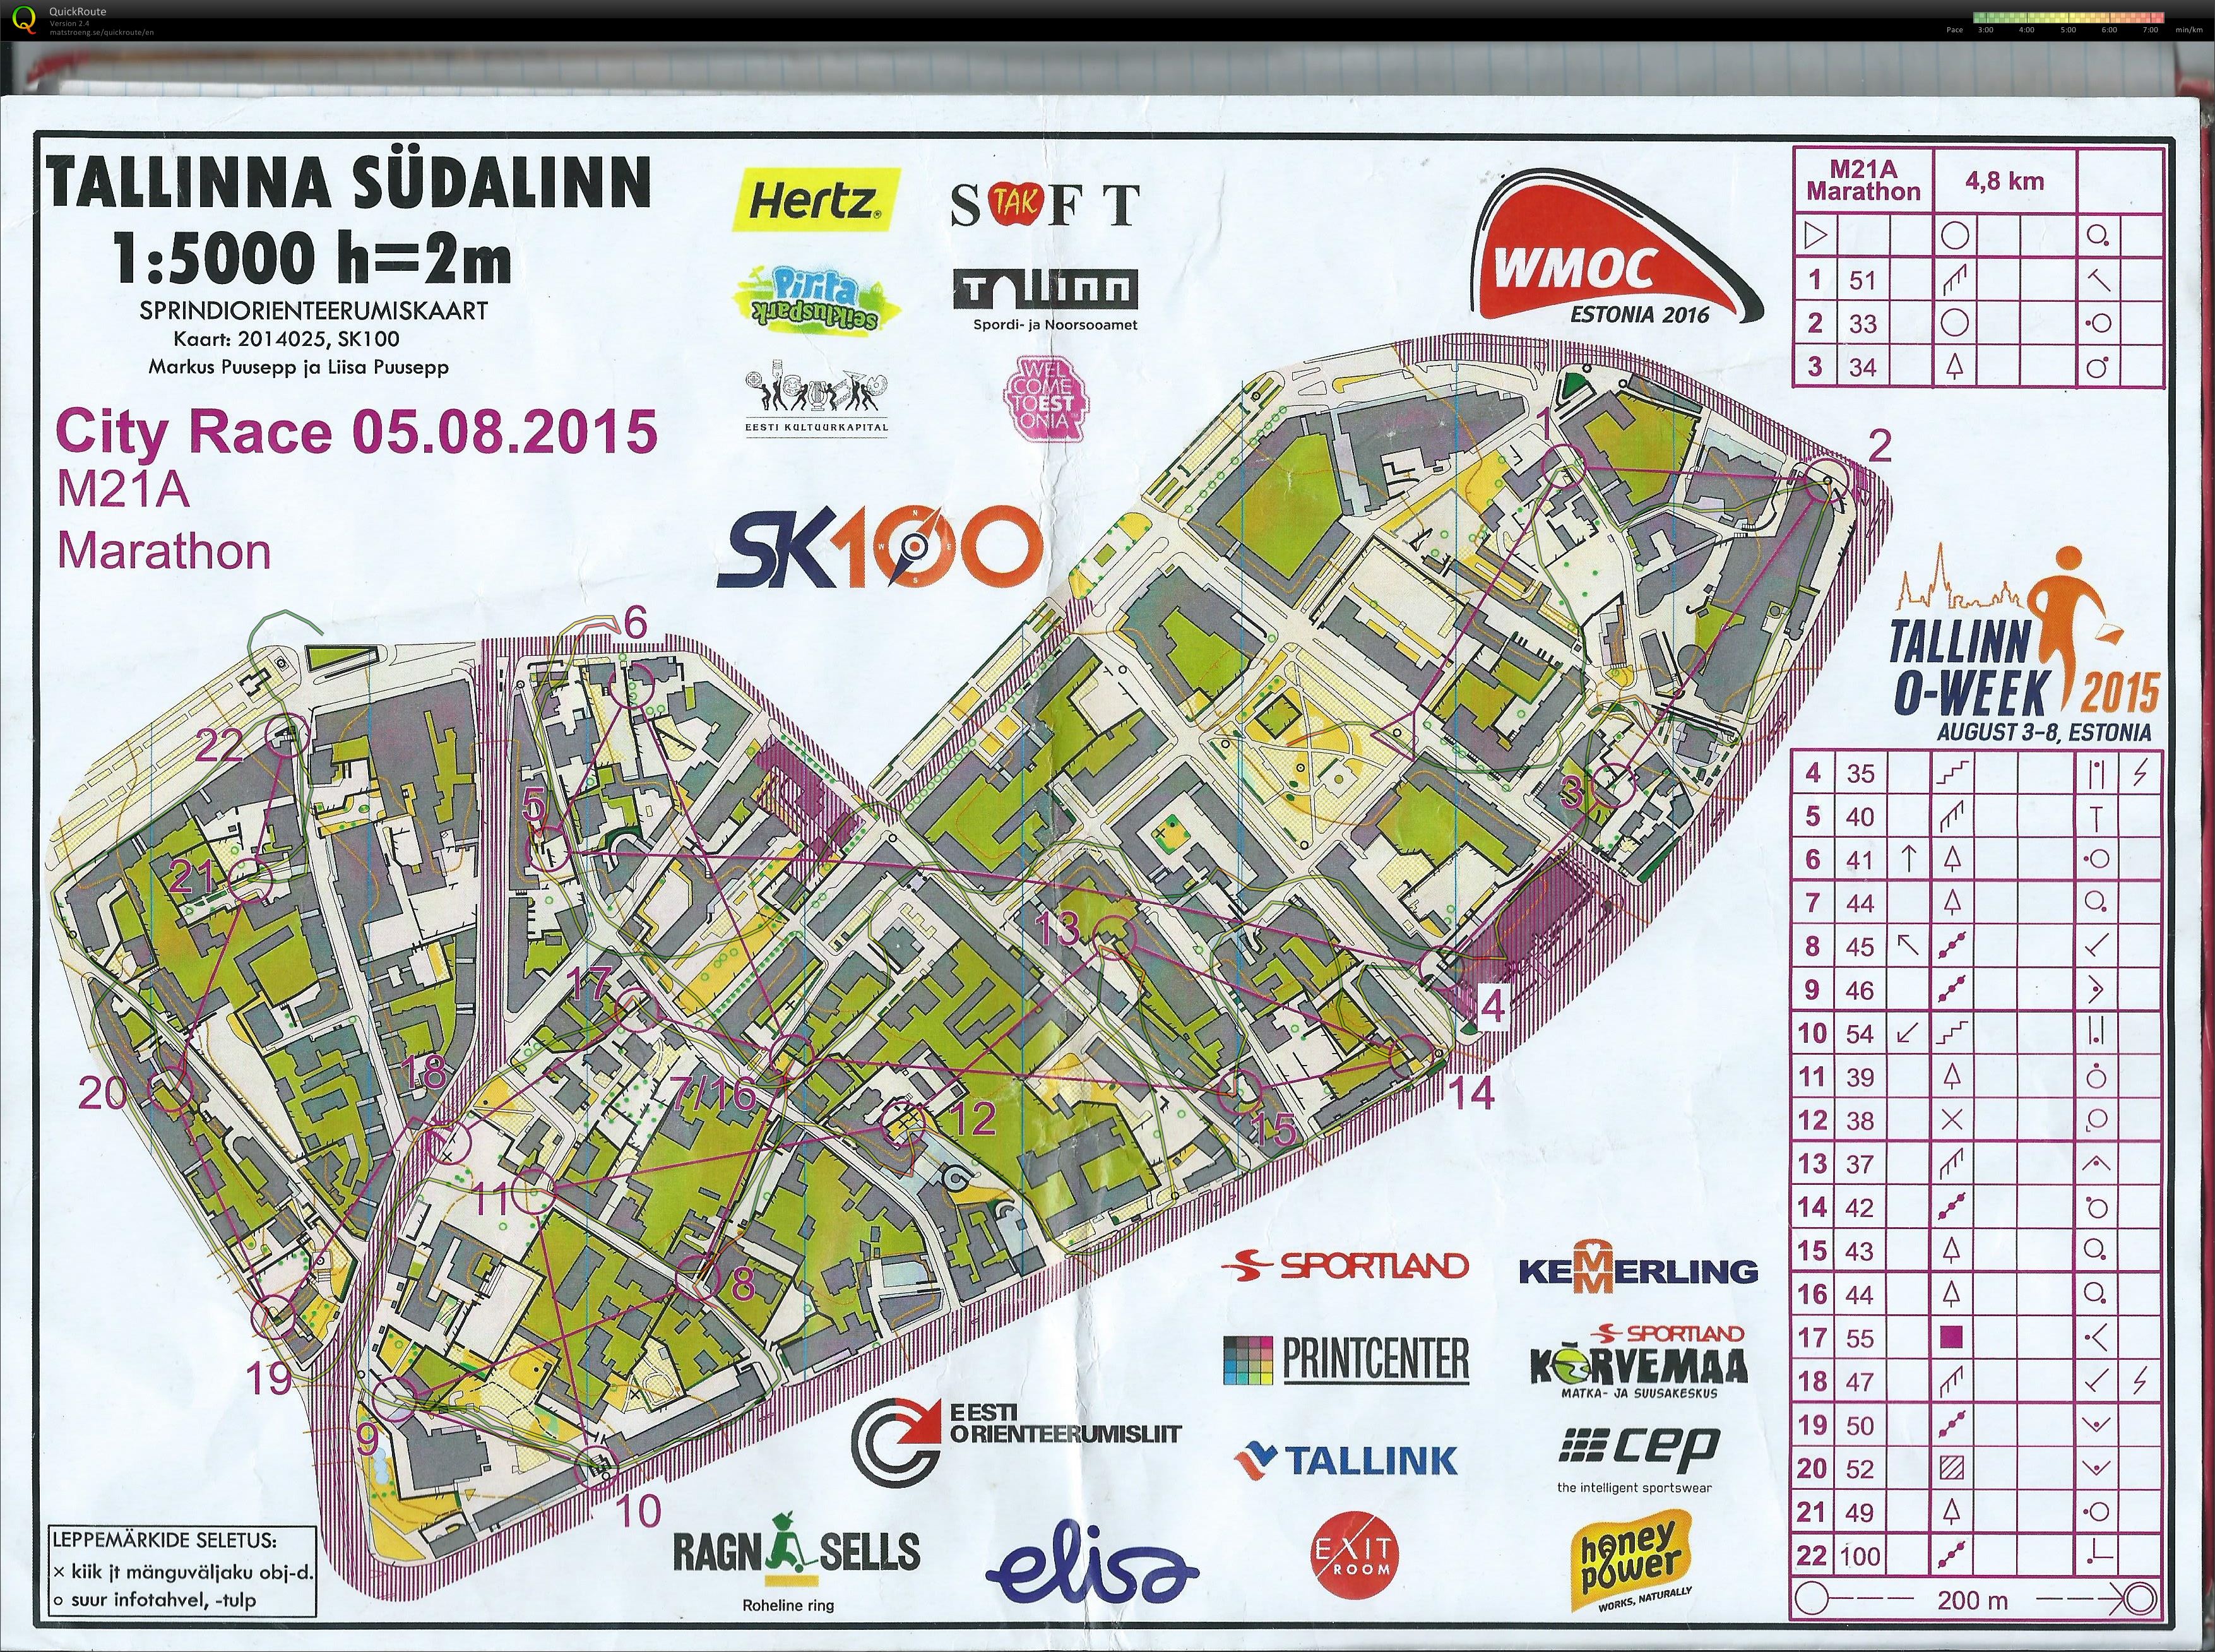 Z378 - Tallinn O-Week - E3 - City Race (05/08/2015)